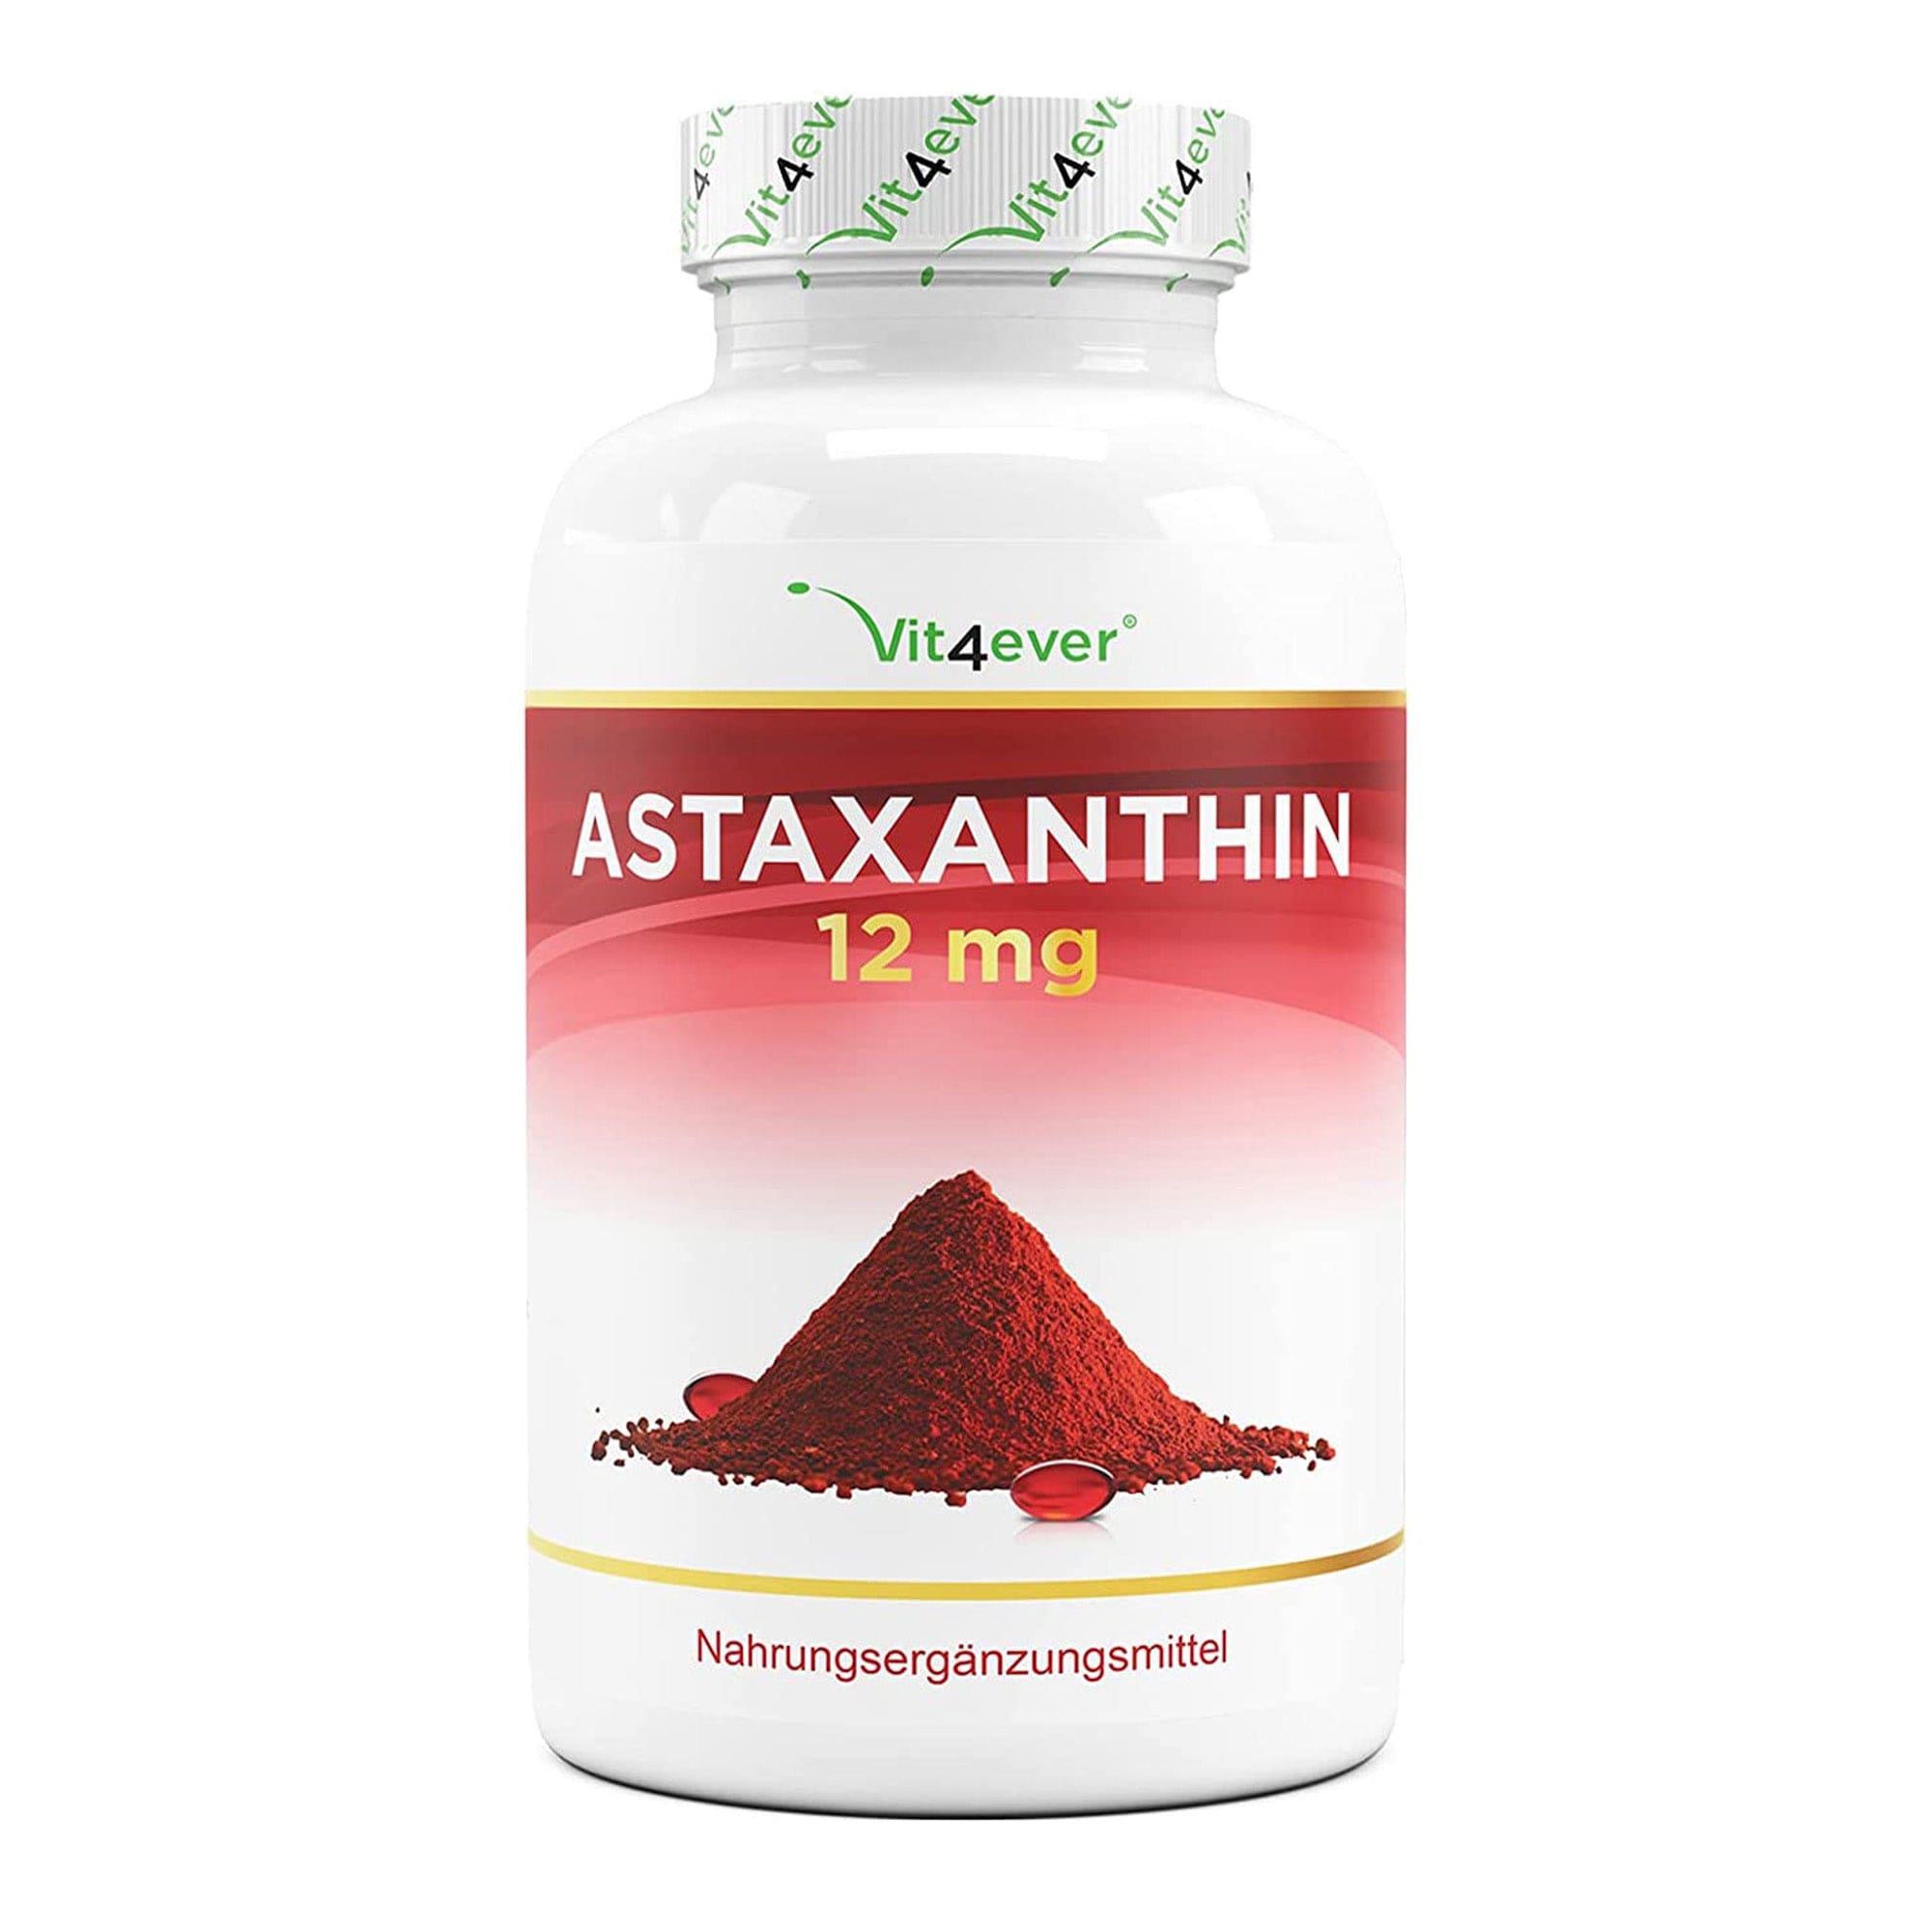 vit4ever Astaxanthine capsules 12 mg